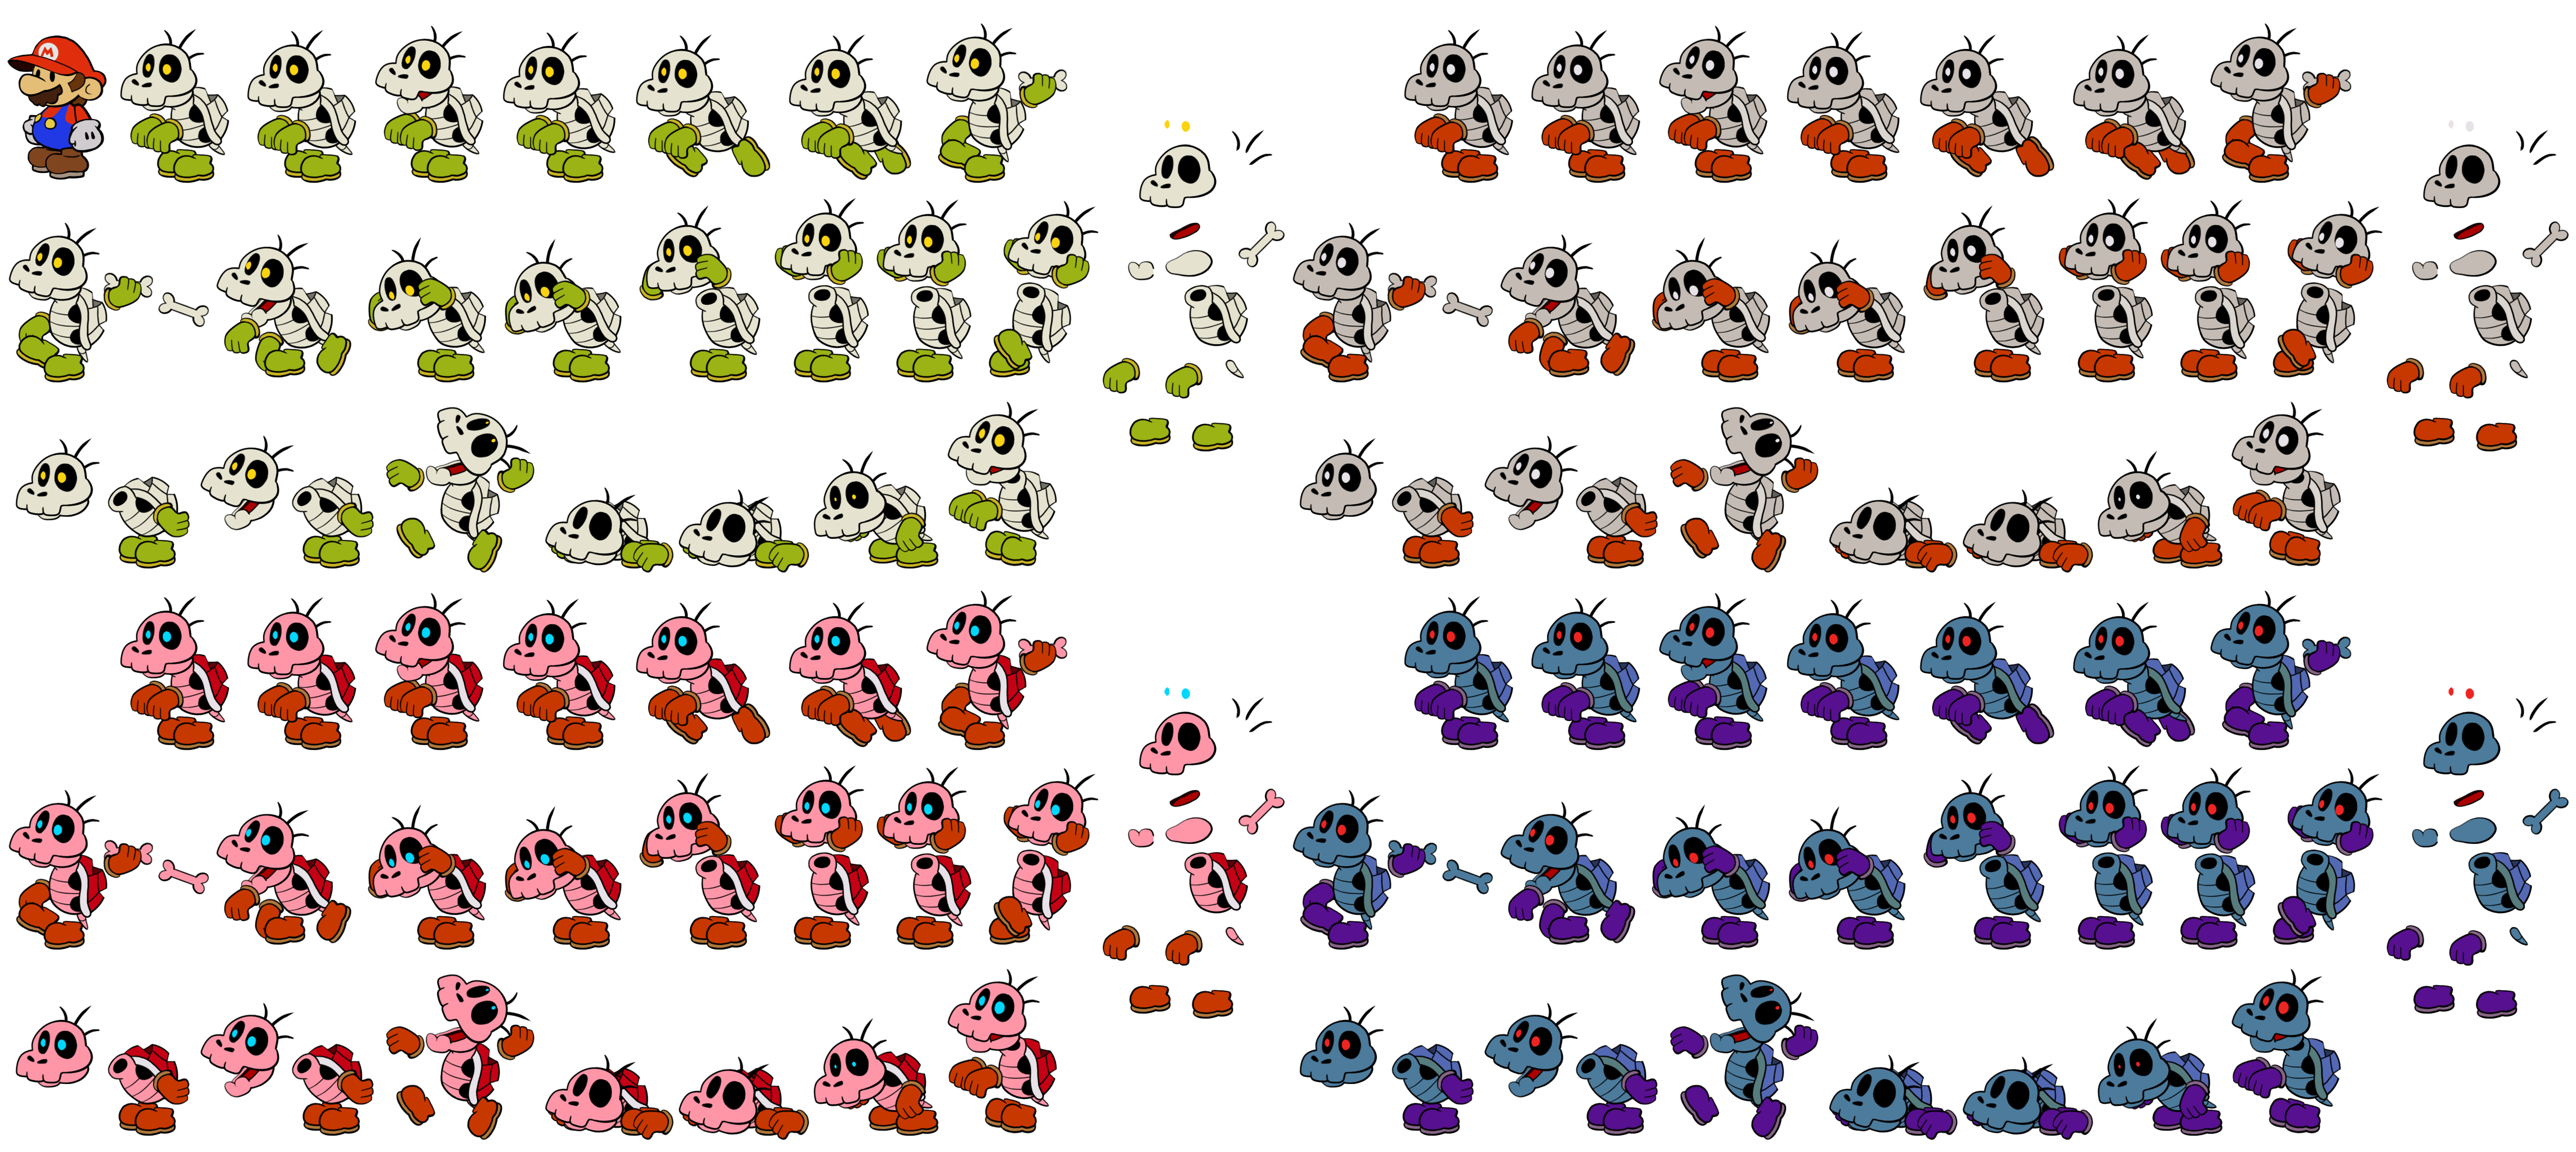 Dry Bones & Related Enemies - Dry Bones (Paper Mario-Style). 